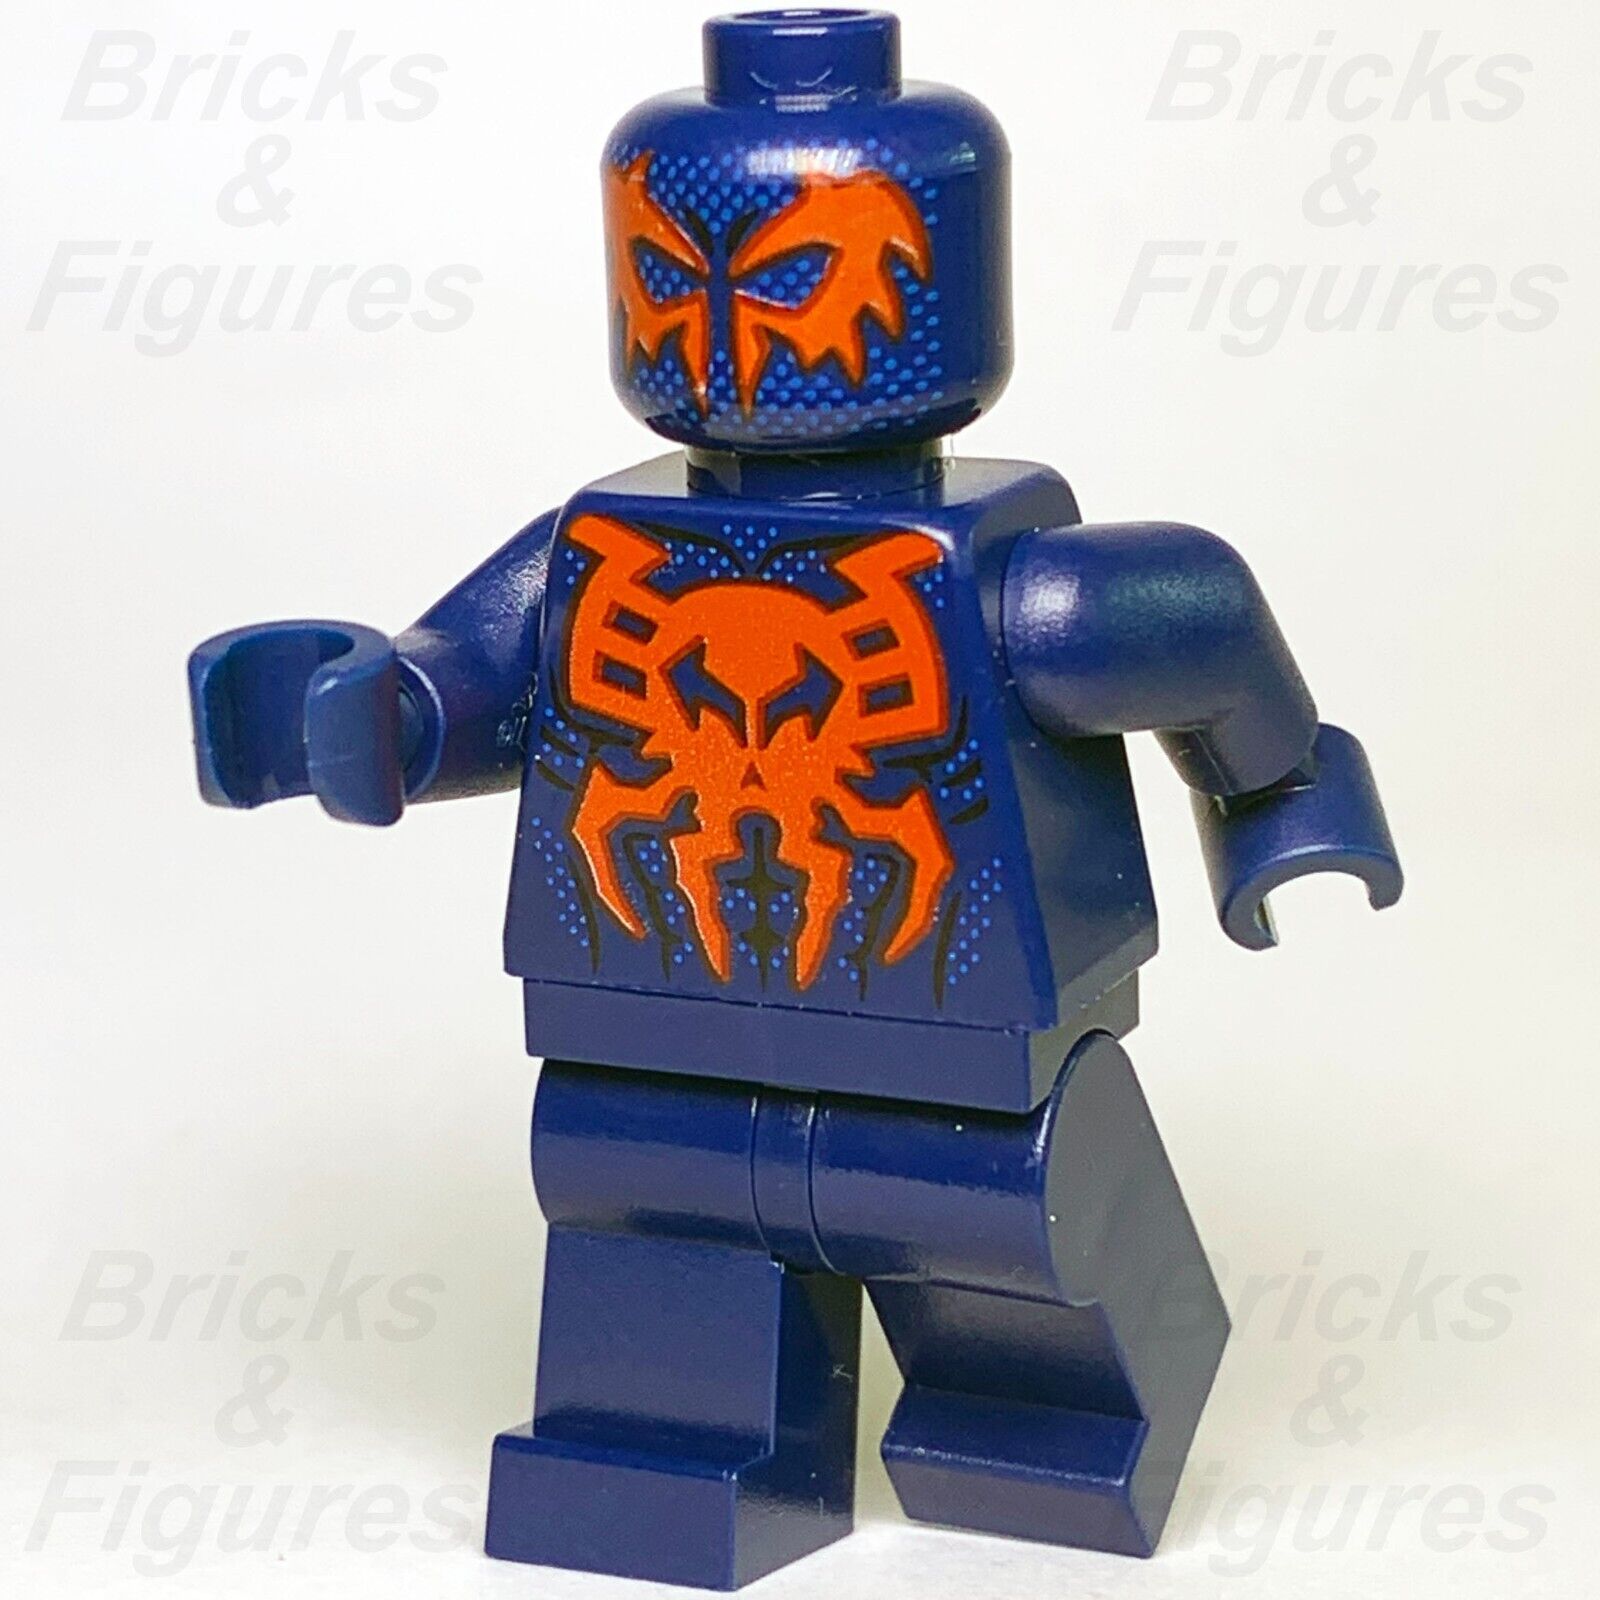 LEGO Super Heroes Spider-Man 2099 Minifigure Miguel O'Hara Marvel 76114 sh539 1